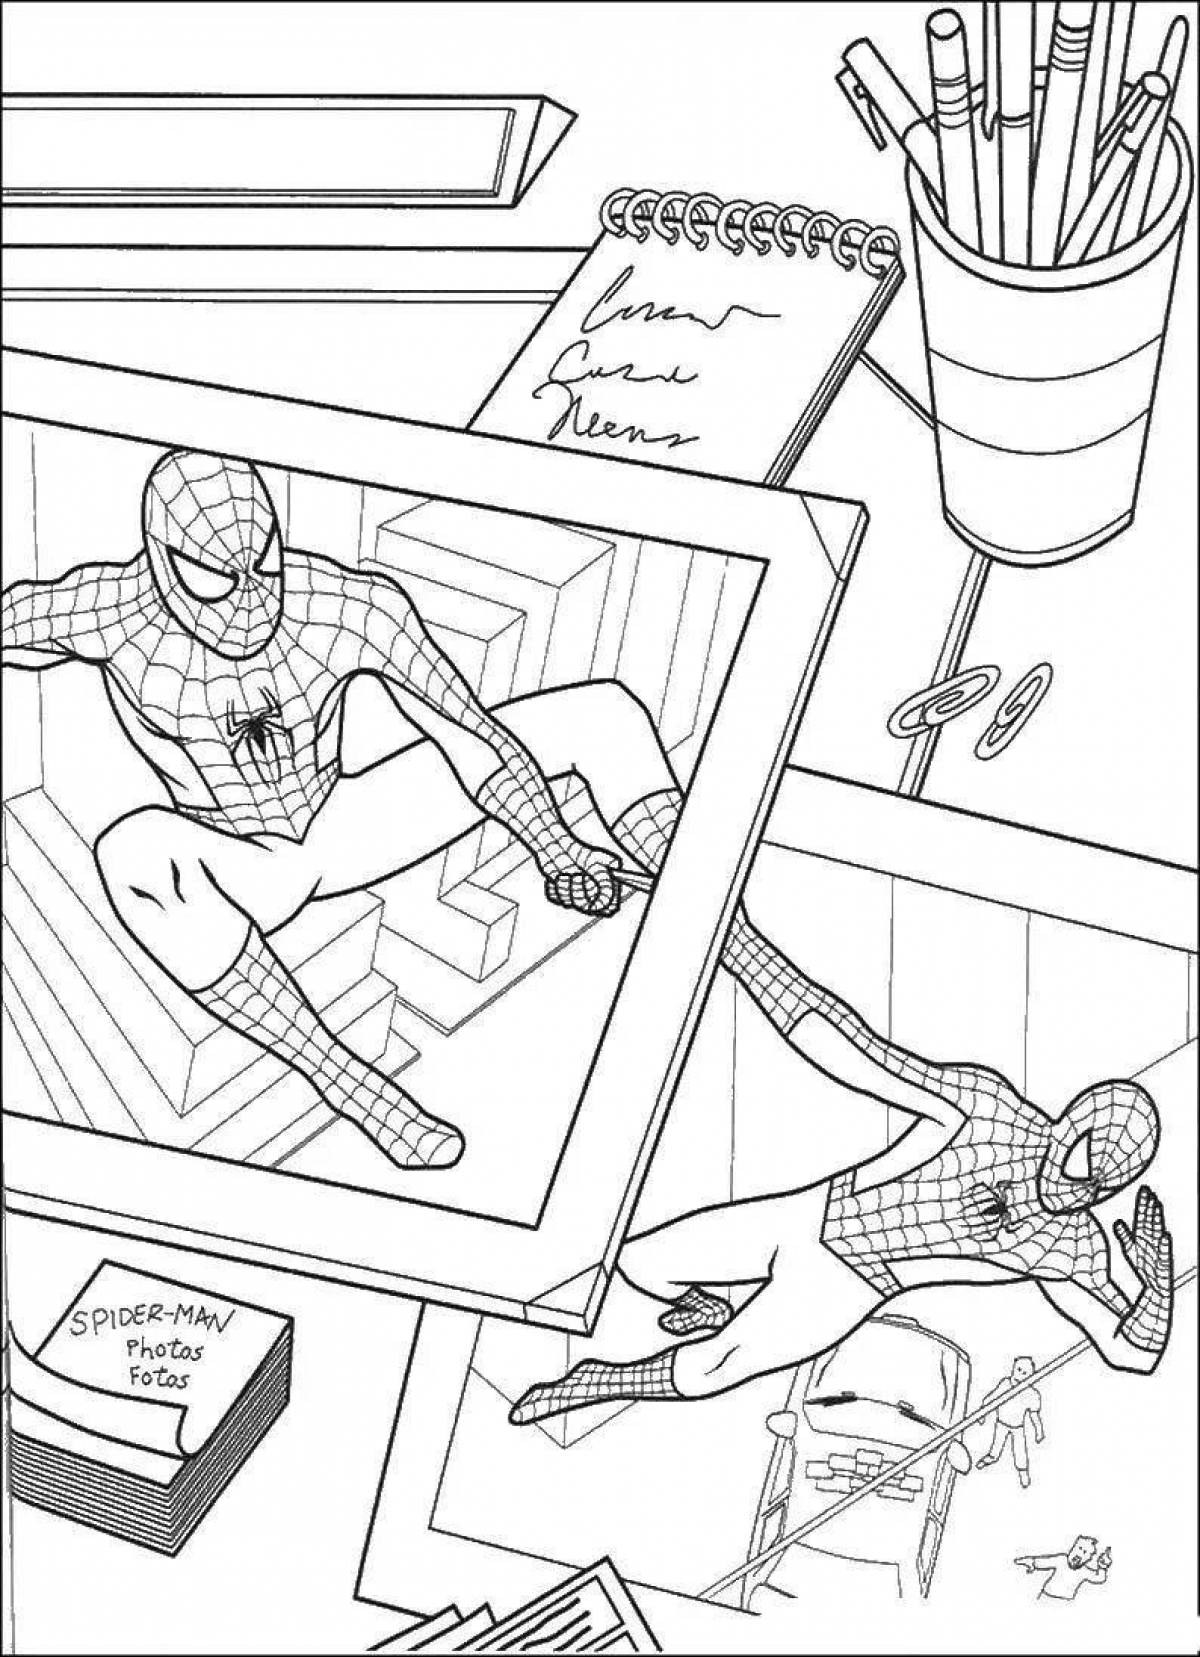 Coloring book energetic comic spider-man